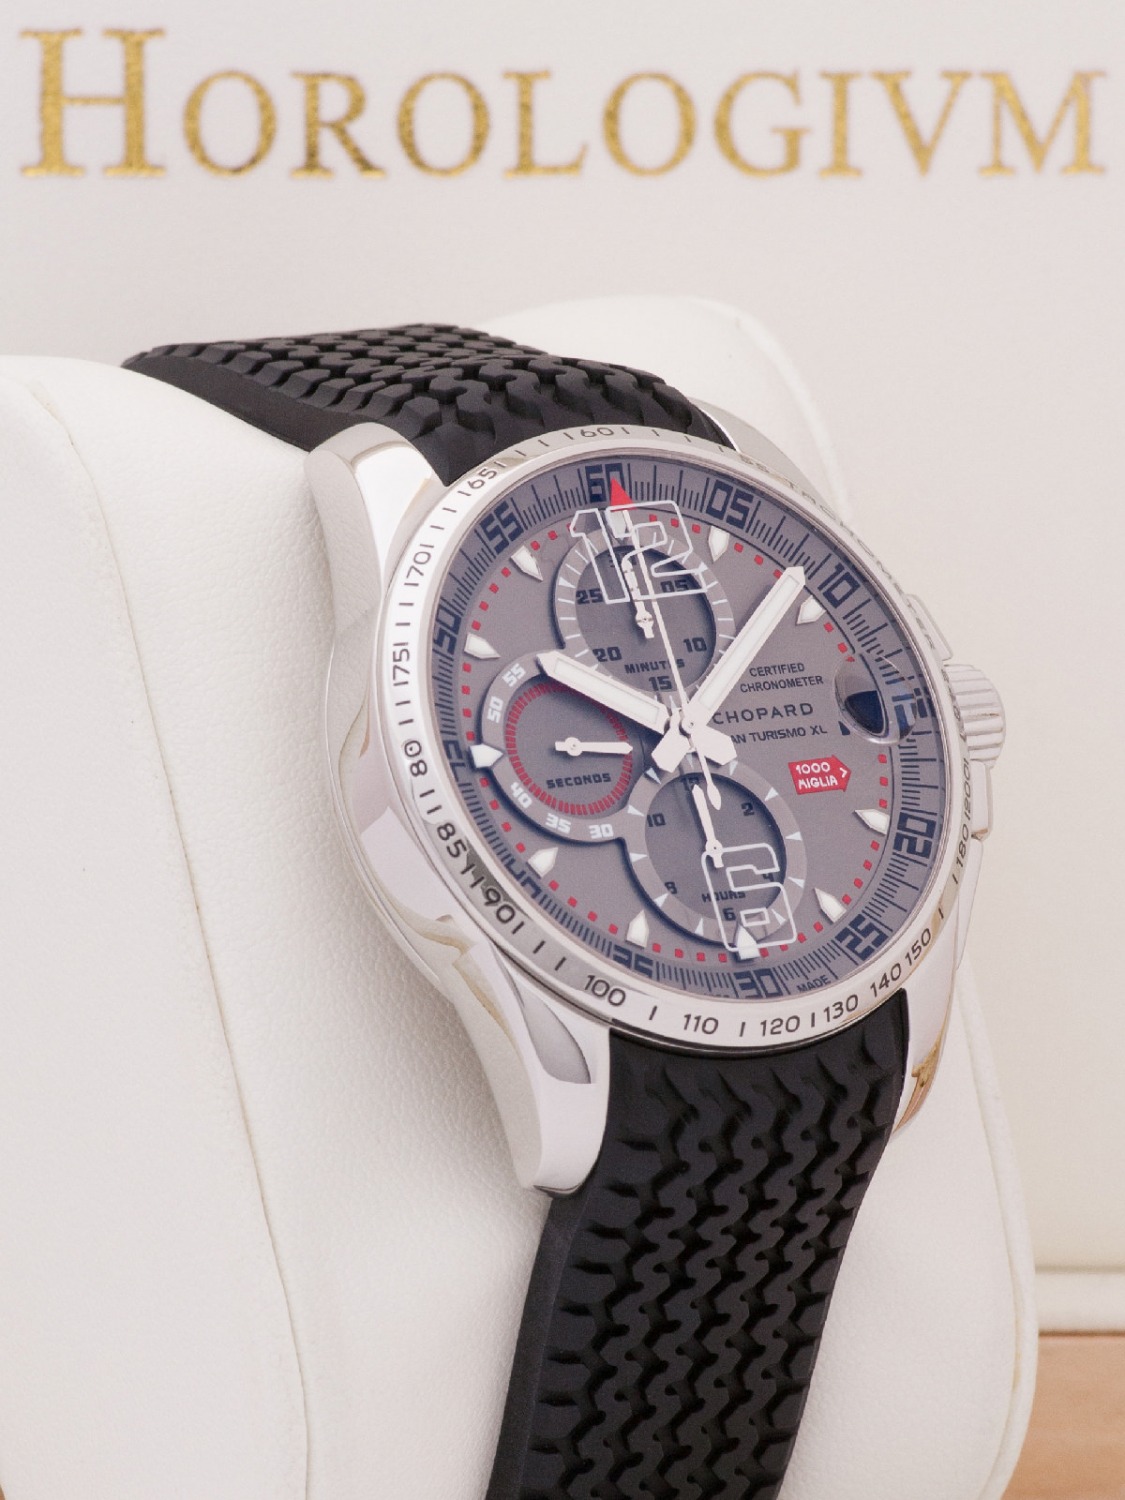 Chopard Mille Miglia GT XL Limited 2007 watch, silver